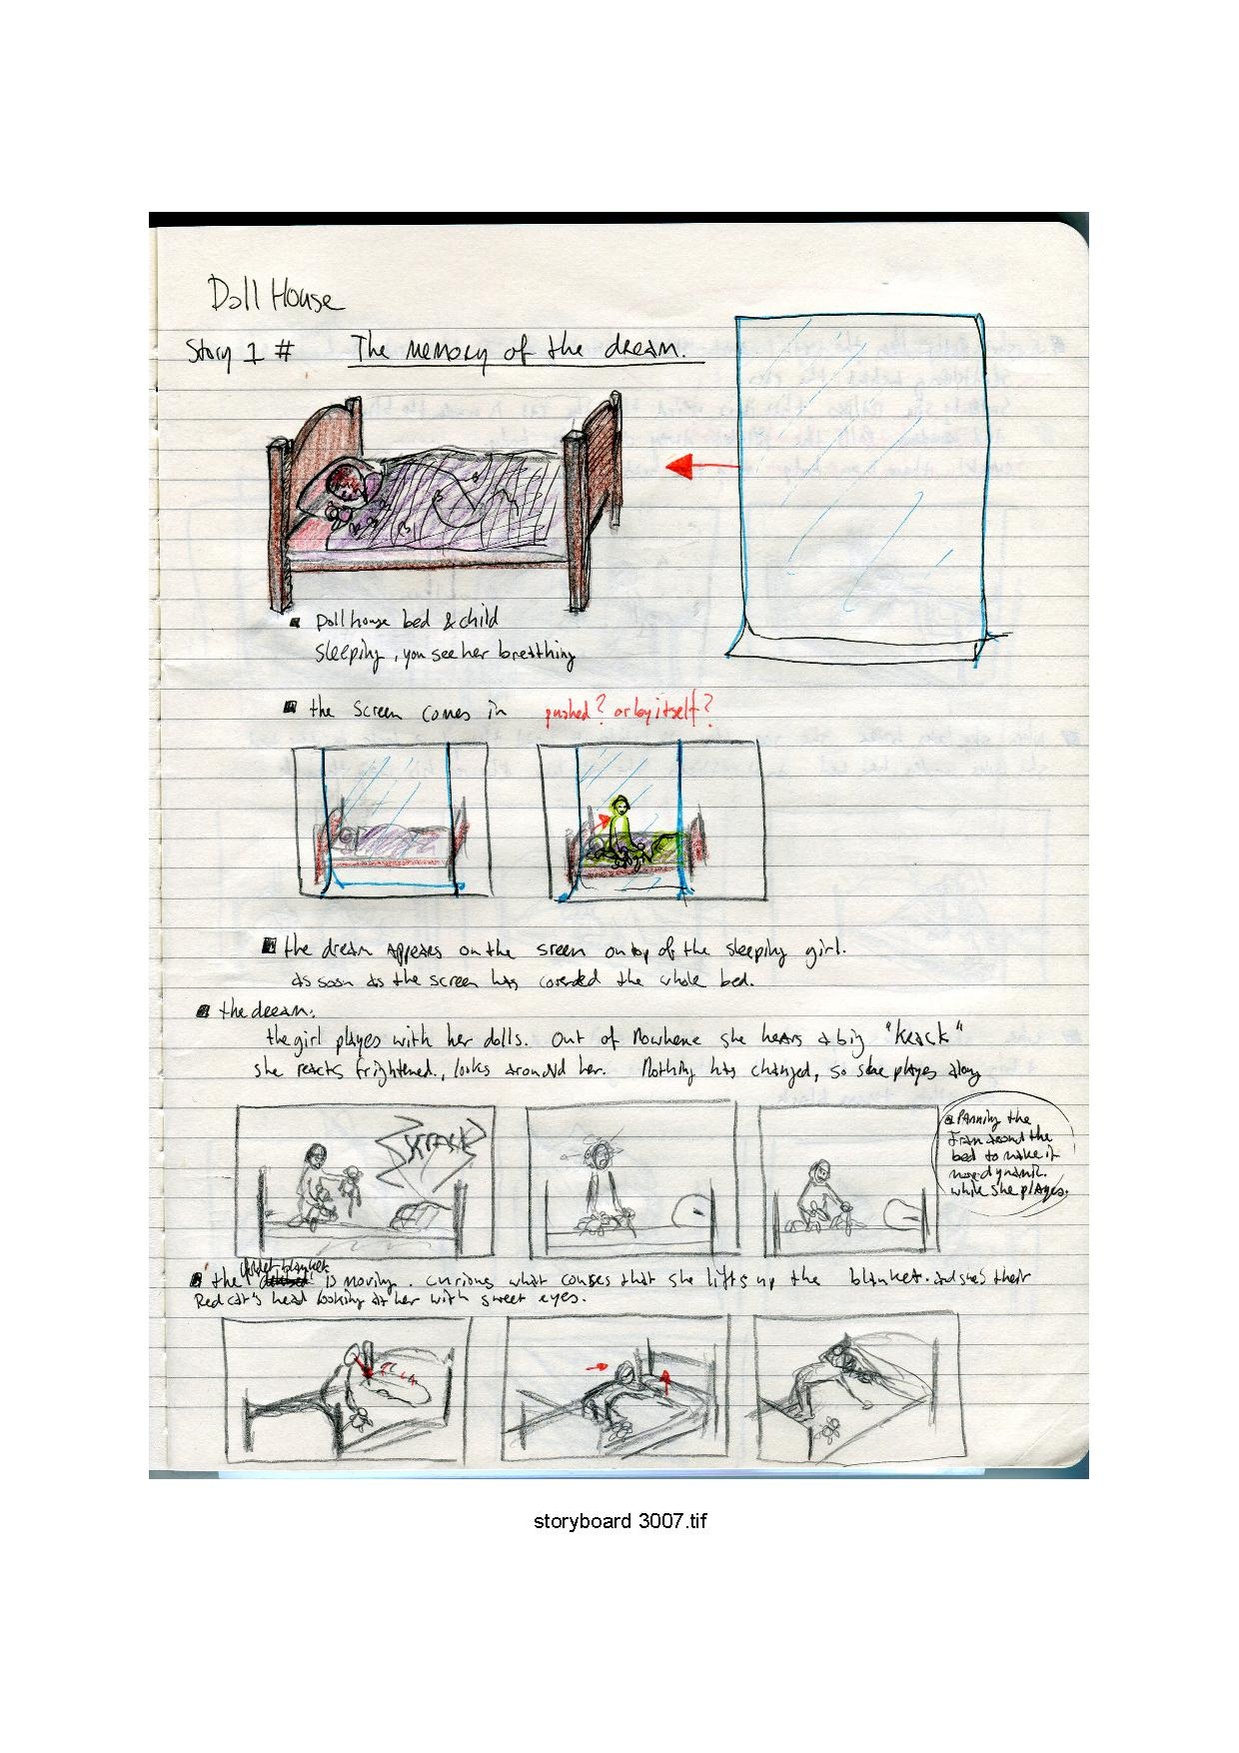 Storyboard doll house story 1.pdf